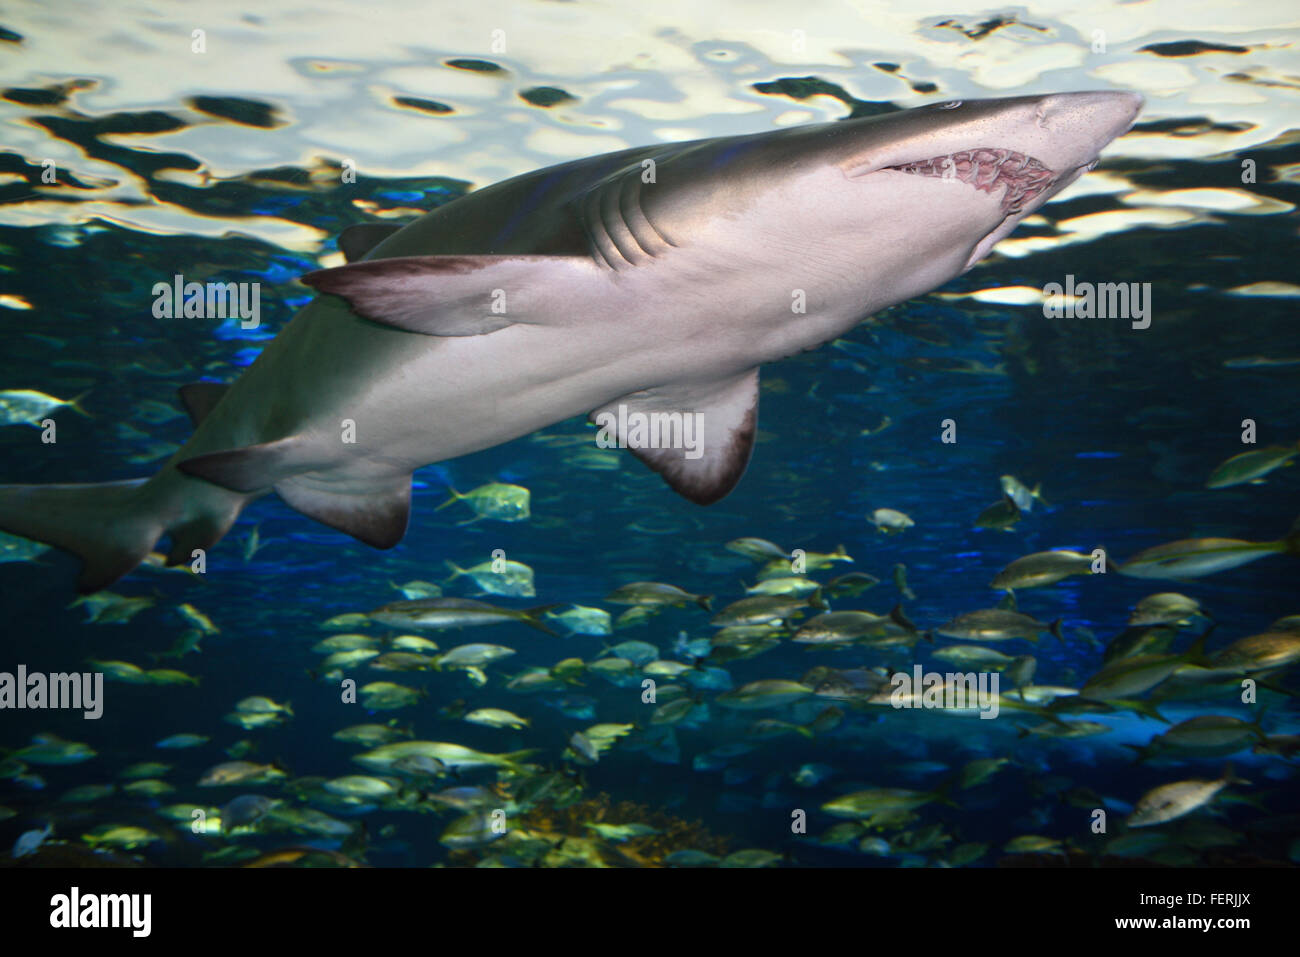 Underside of a Sand Tiger Shark with schools of fish Ripleys Aquarium Toronto Stock Photo